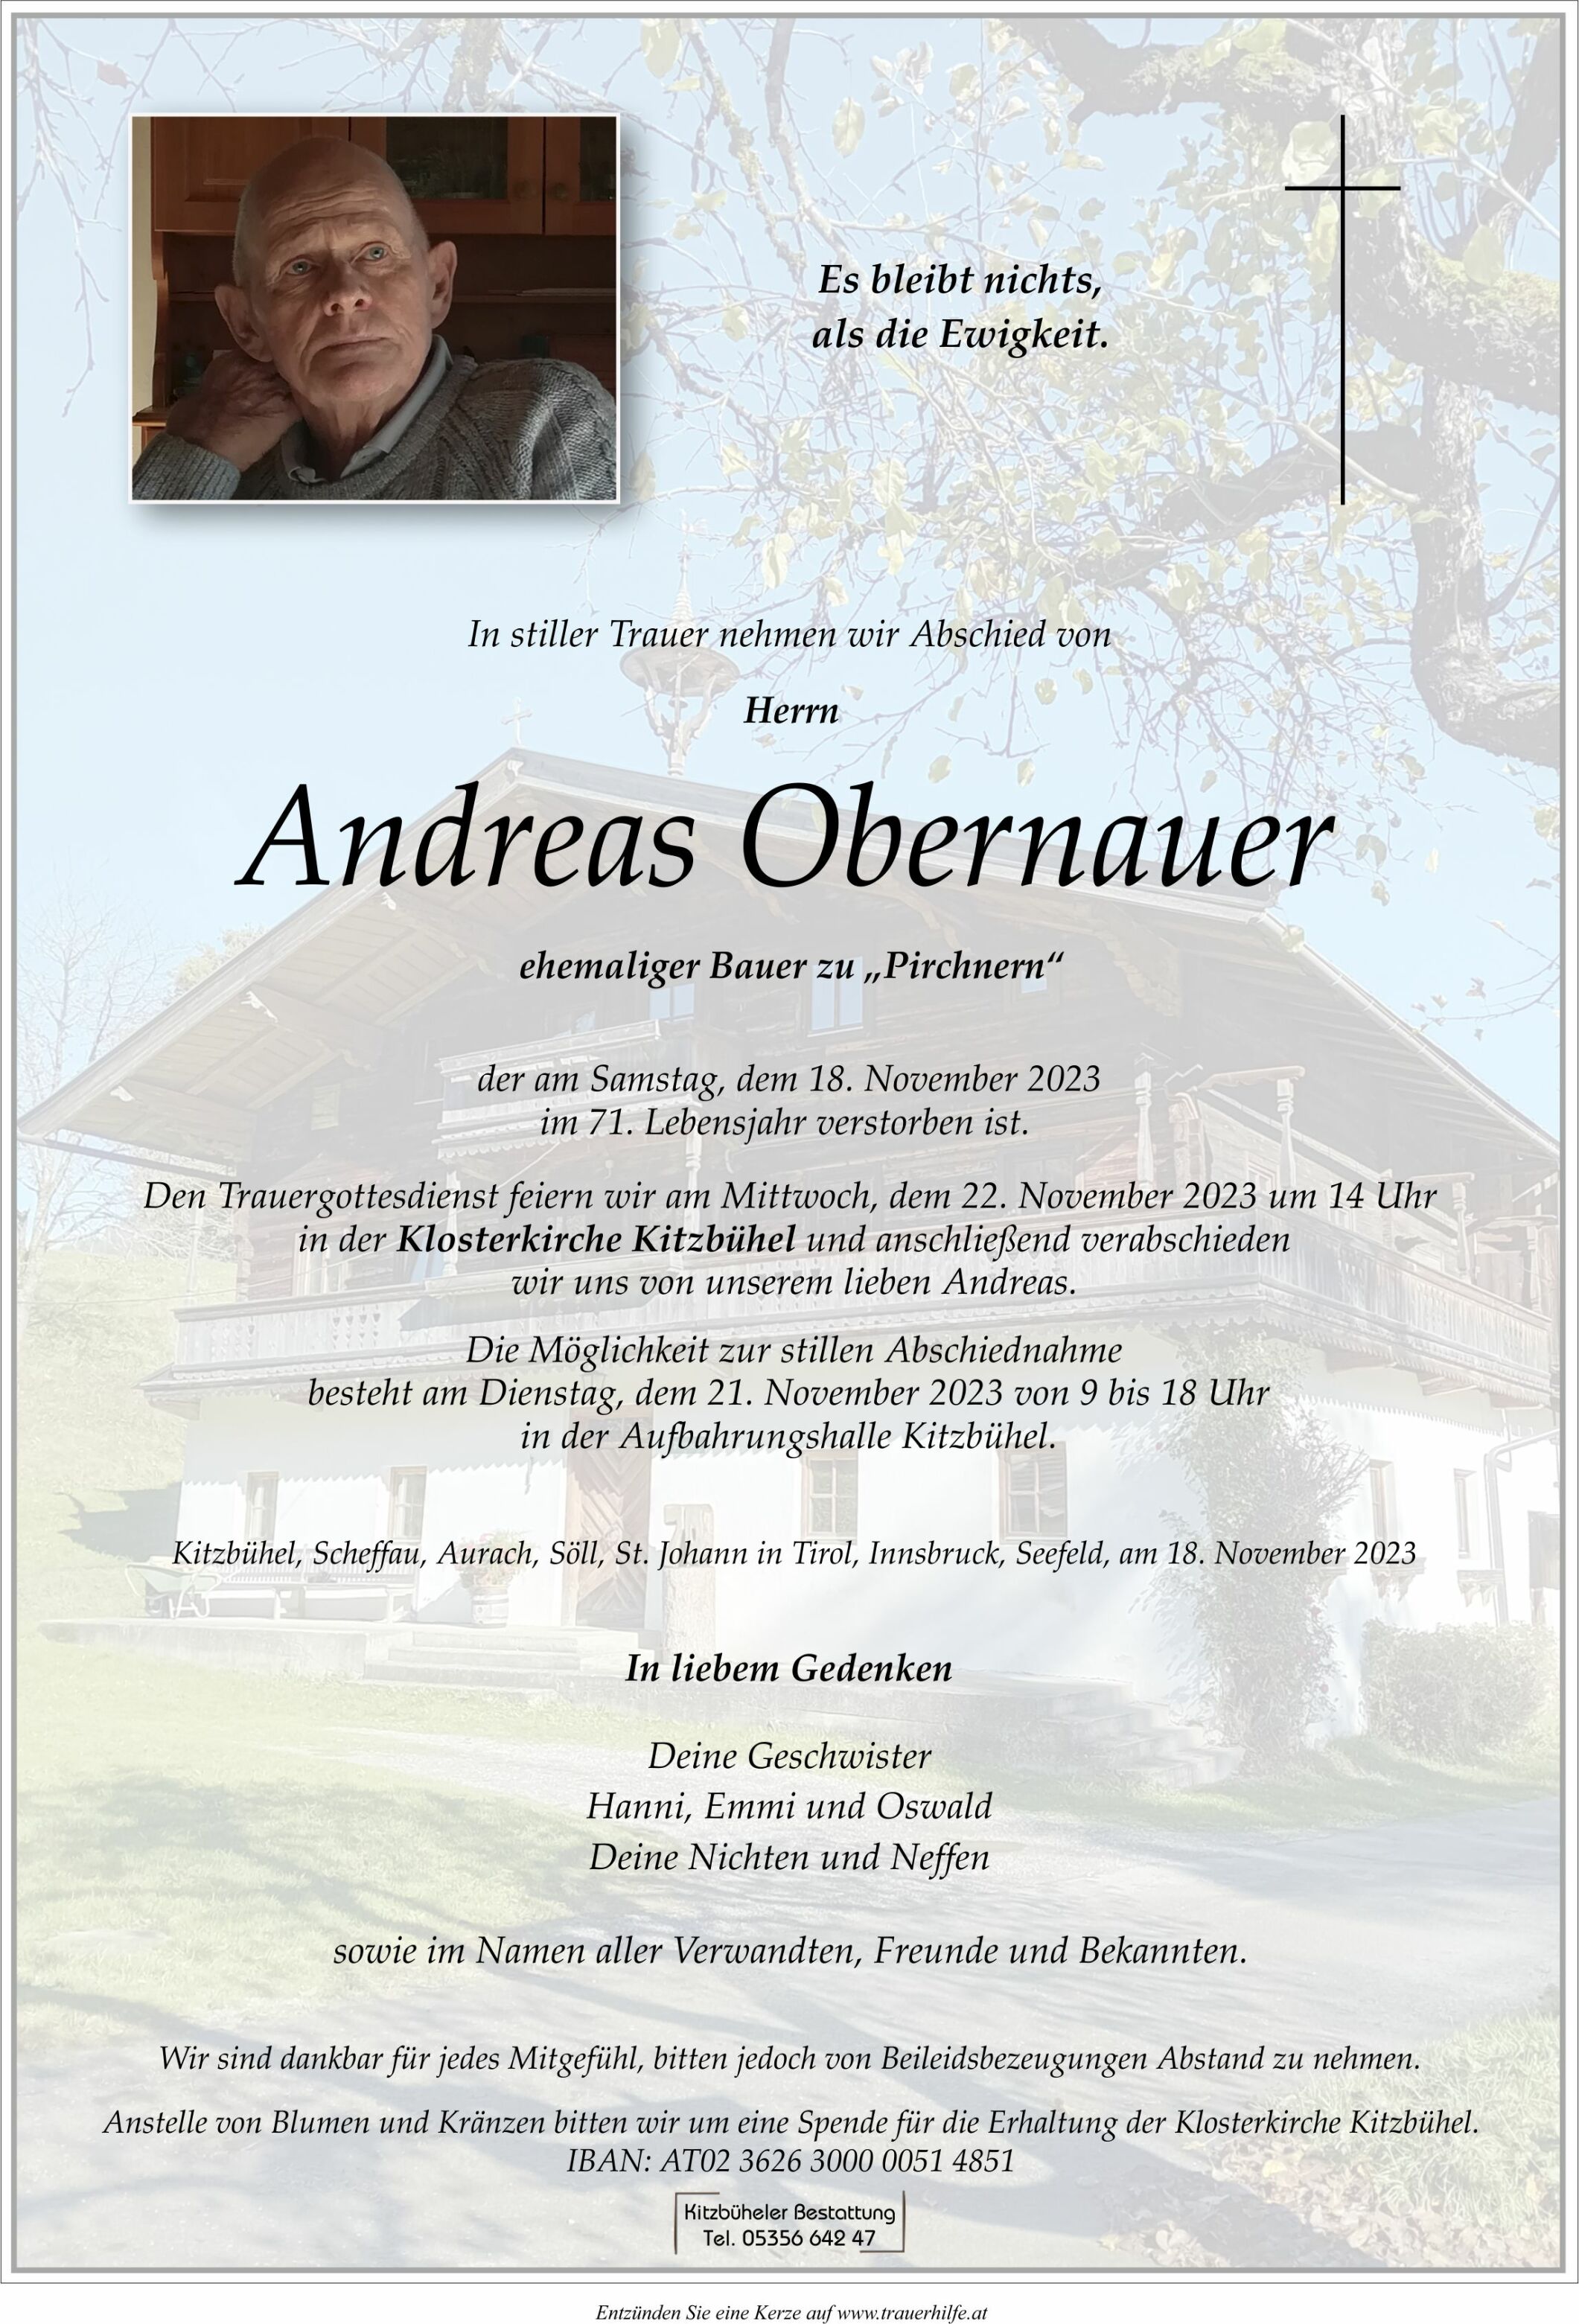 Andreas Obernauer